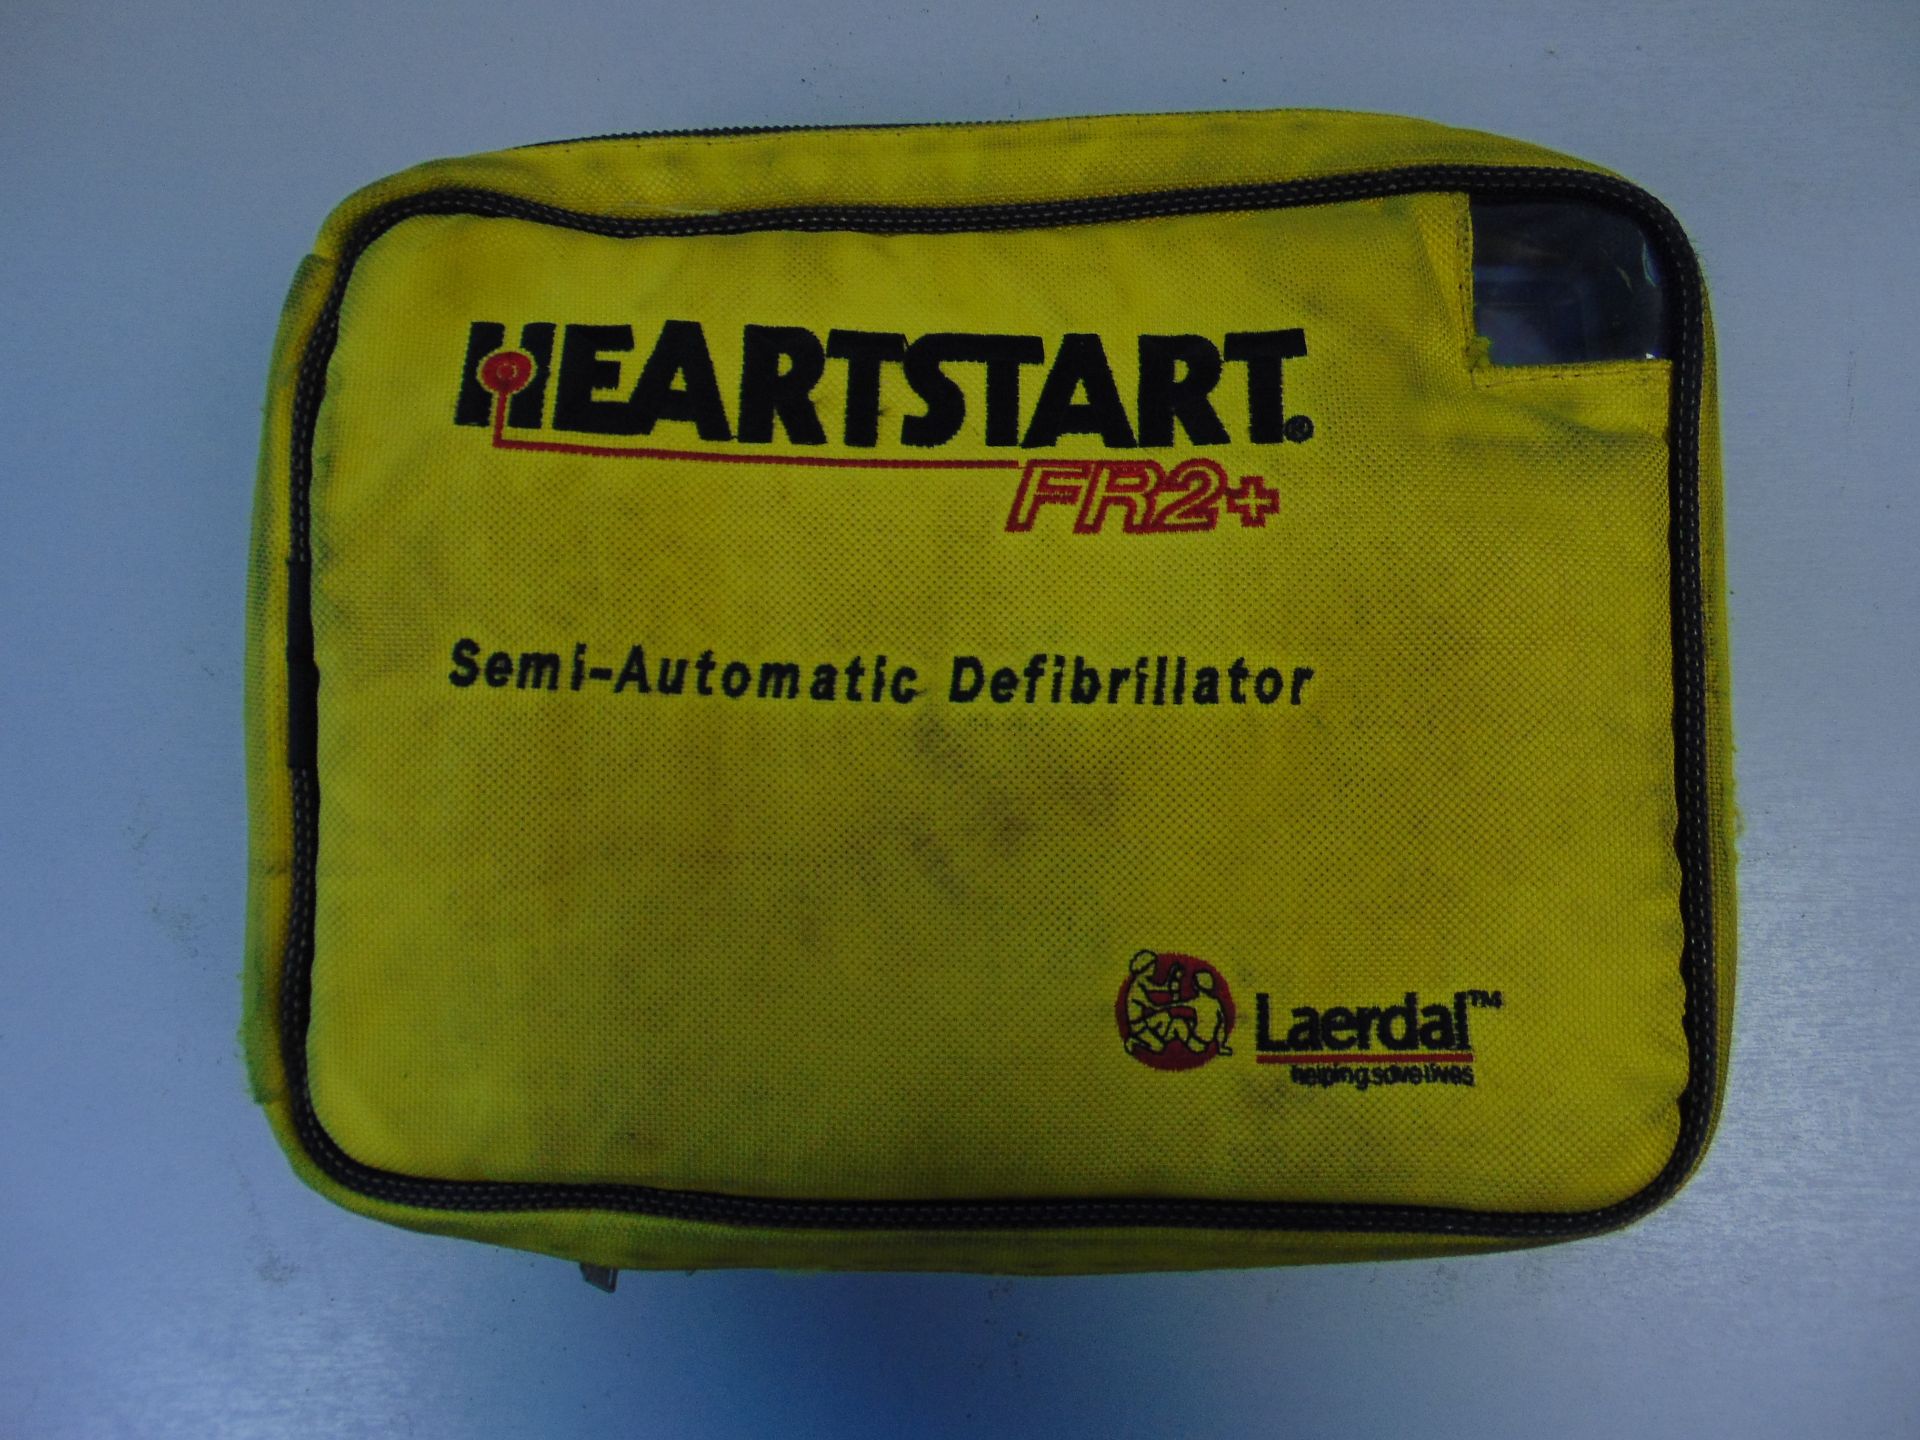 Heartstart FR2+ Semi-Automatic Defibrillator Unit in Carry Case - Image 2 of 3